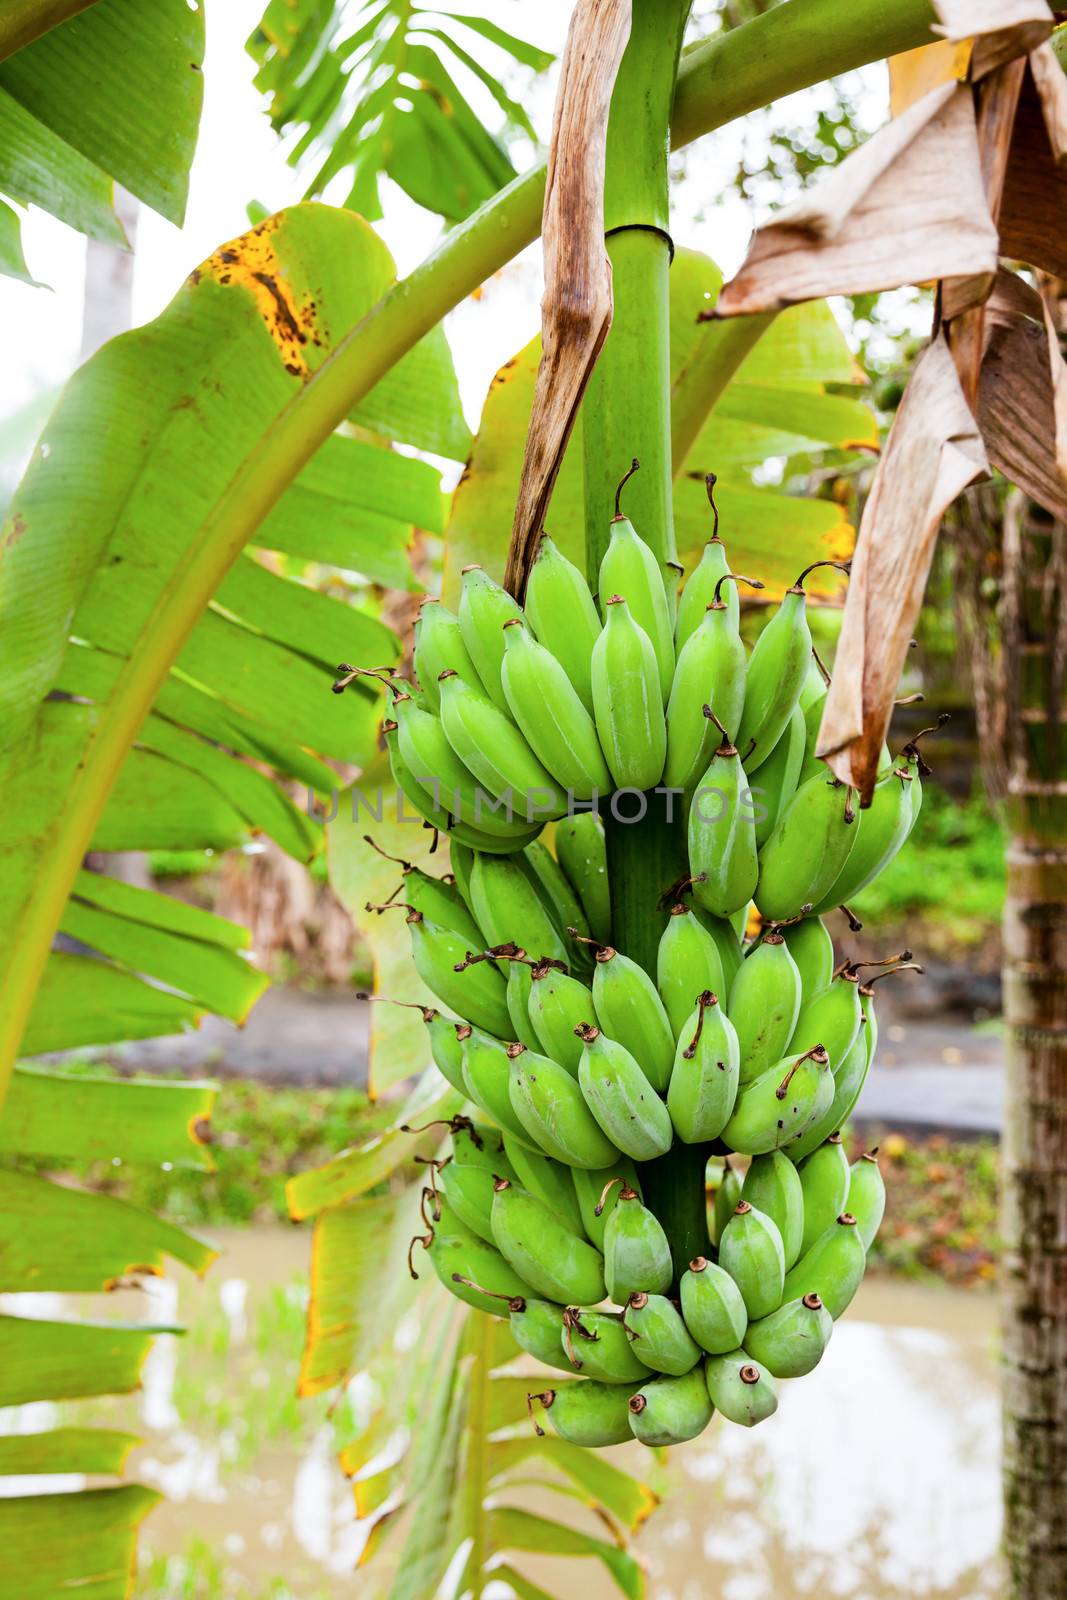 Banana fruit by naumoid